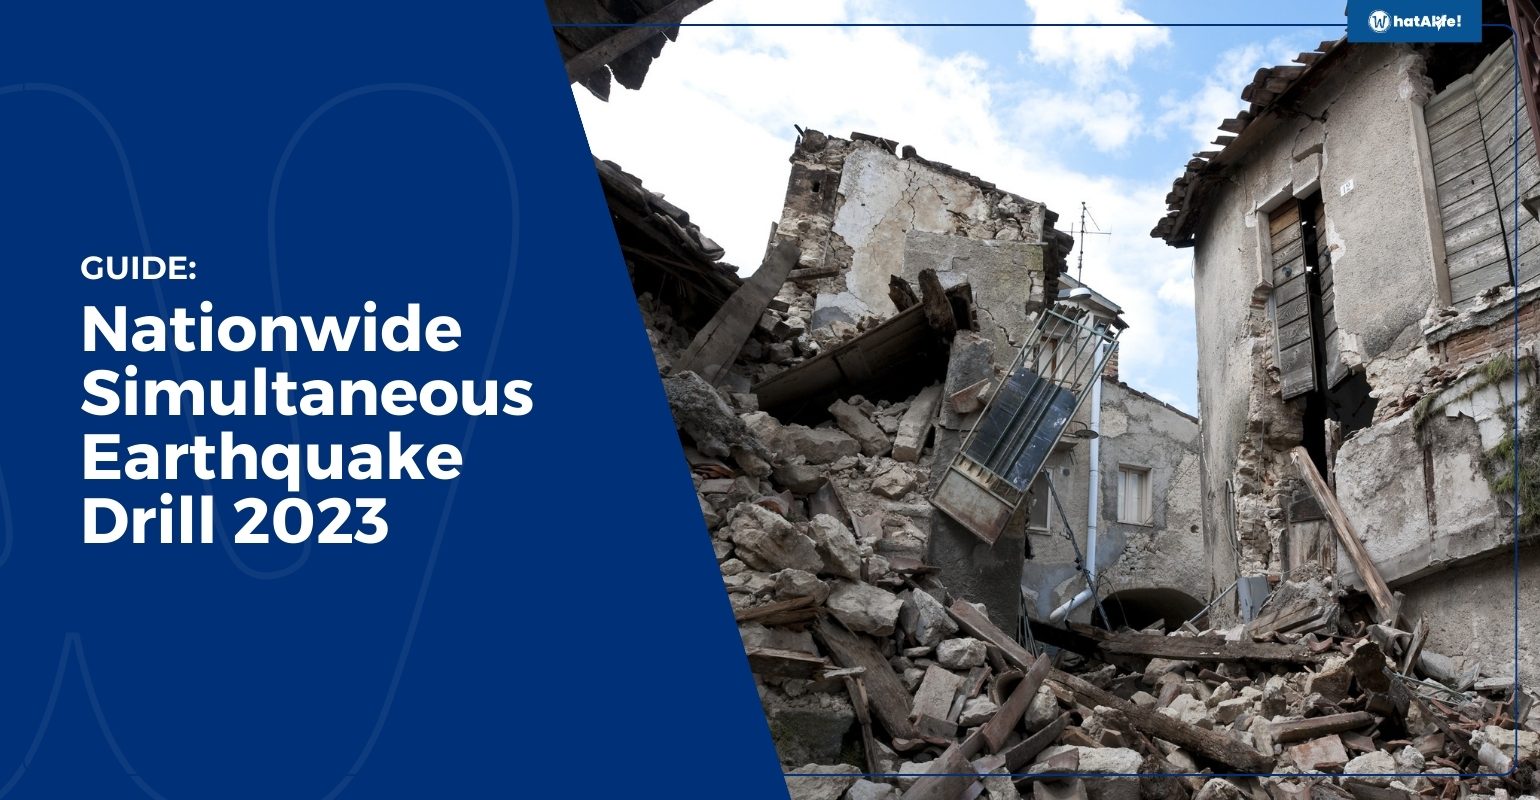 GUIDE: Nationwide Simultaneous Earthquake Drill 2023